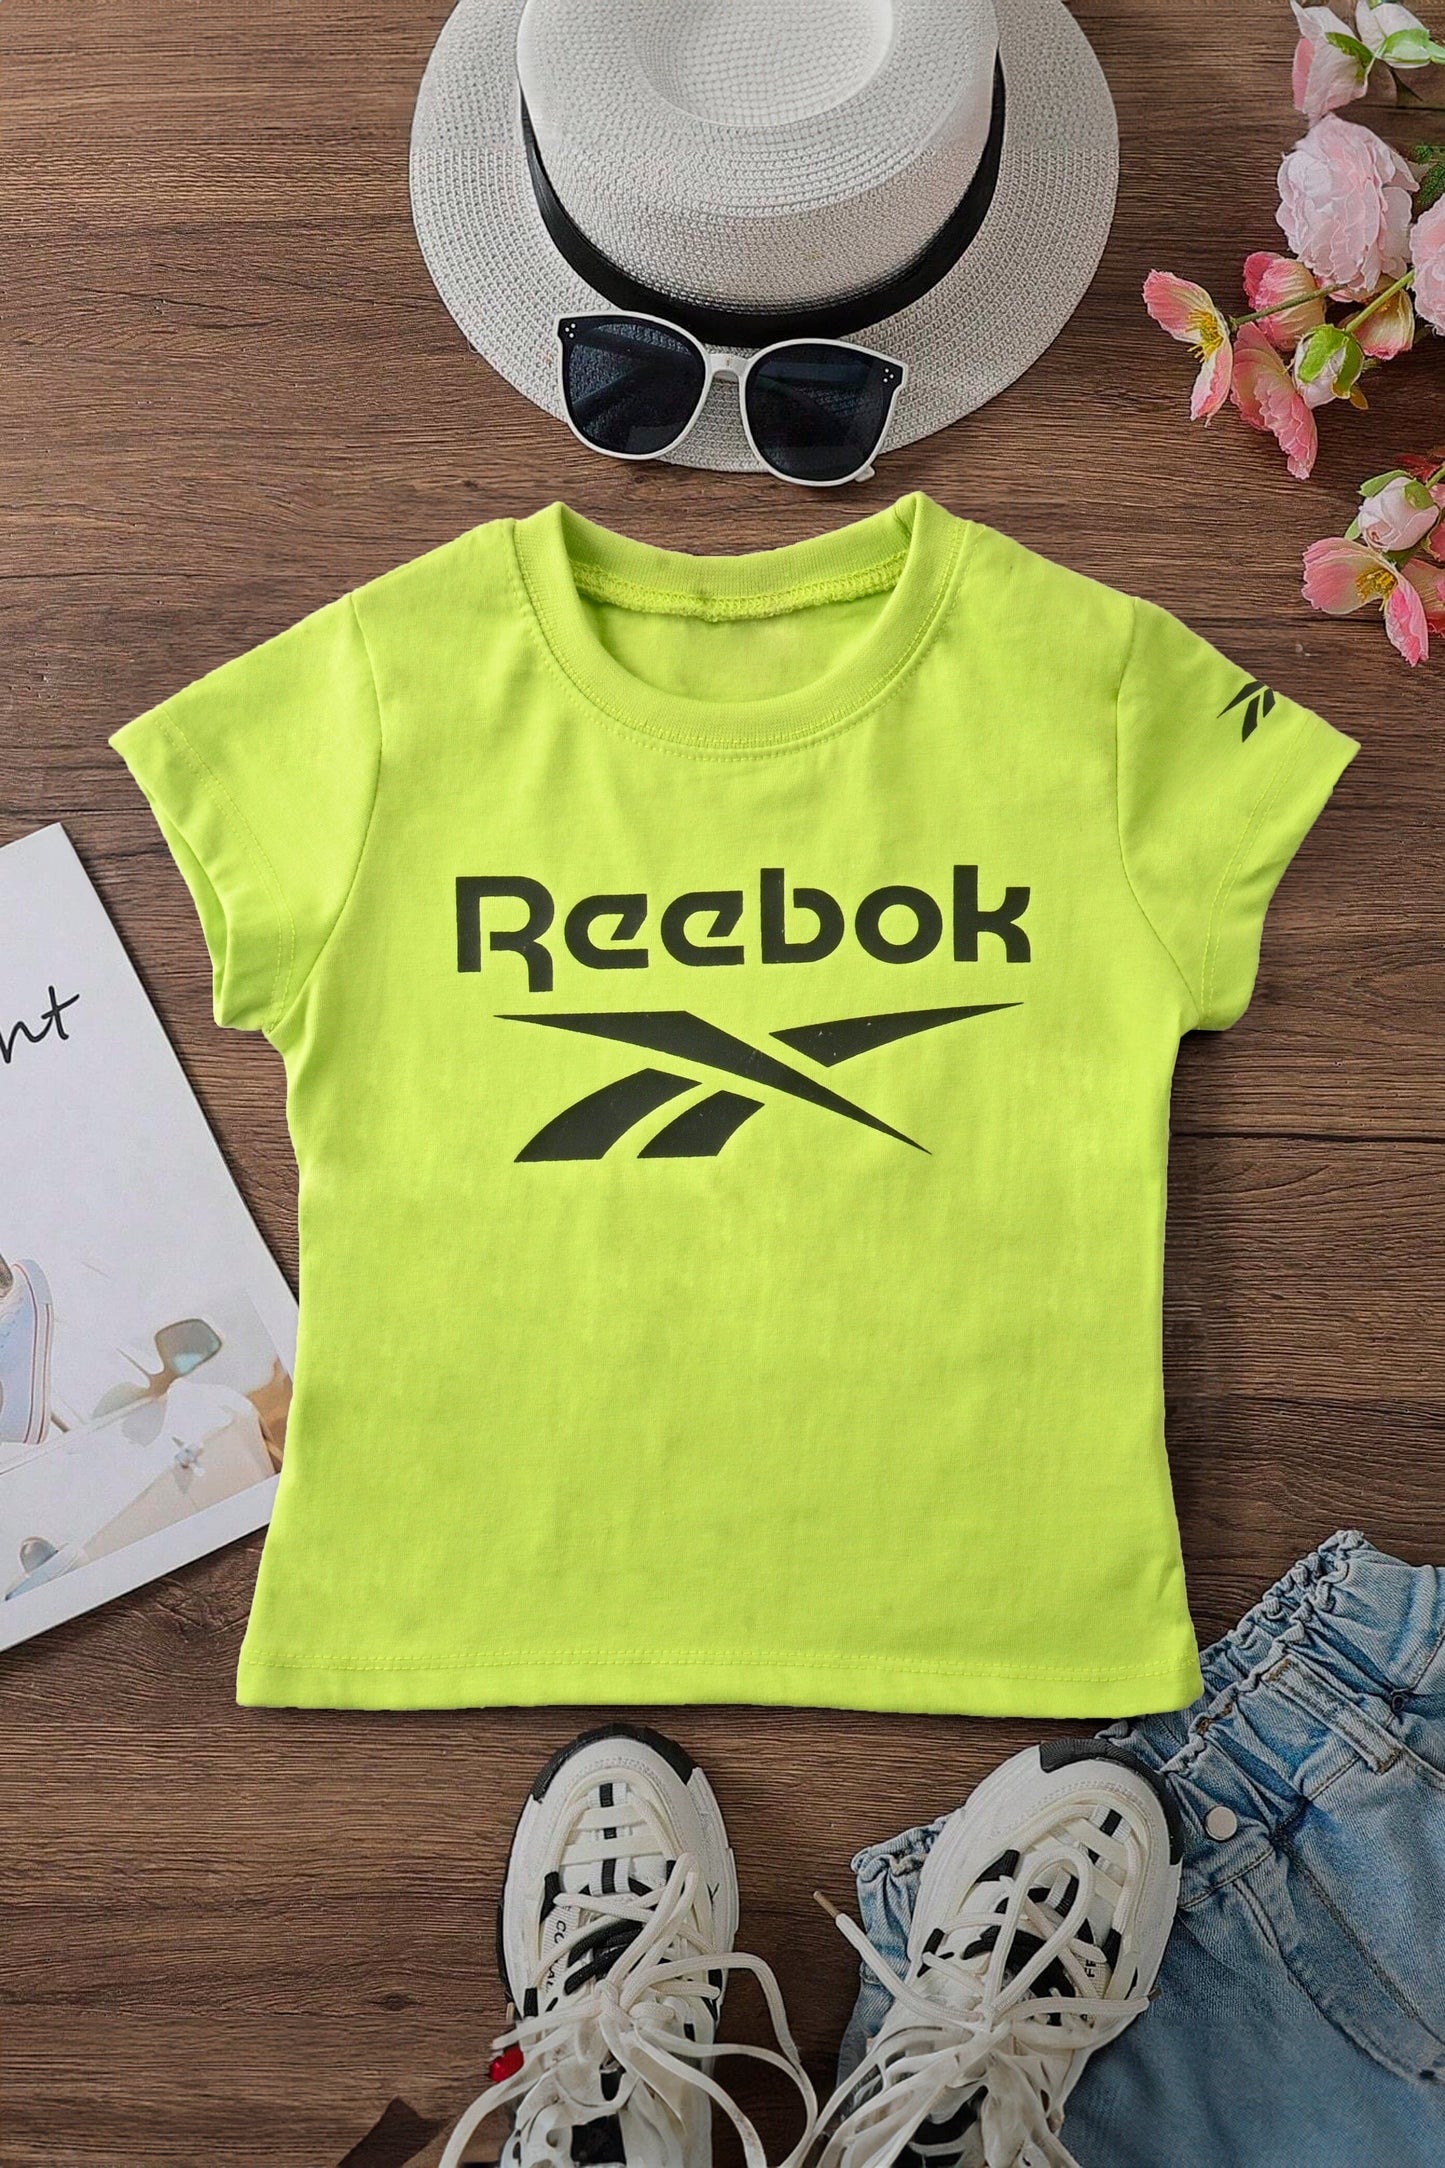 Reebok Kid's Logo Printed Short Sleeve Tee Shirt Kid's Tee Shirt HAS Apparel Parrot 2 Years 